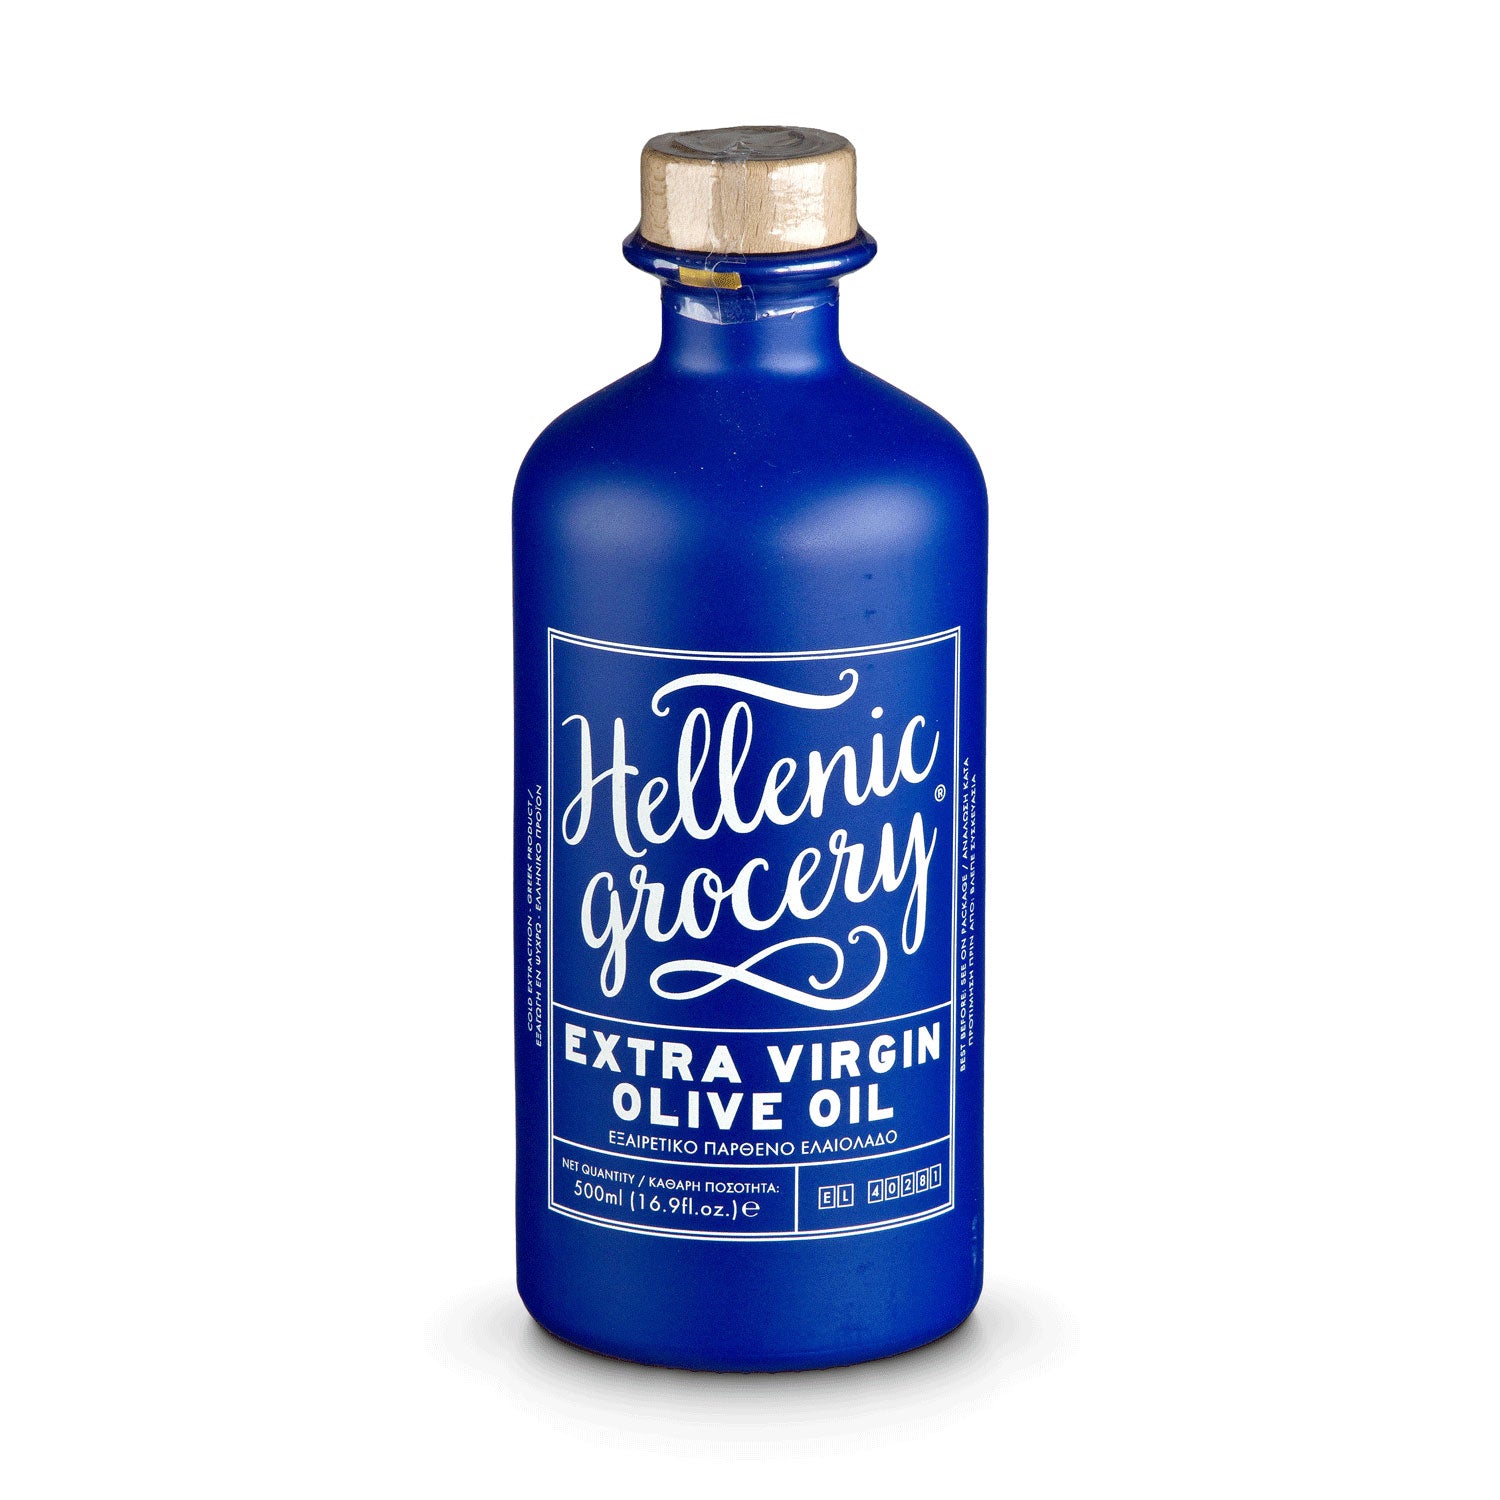 Huile d'Olive Extra Vierge BLUE bouteille en céramique - 500ml - Hellenic Grocery